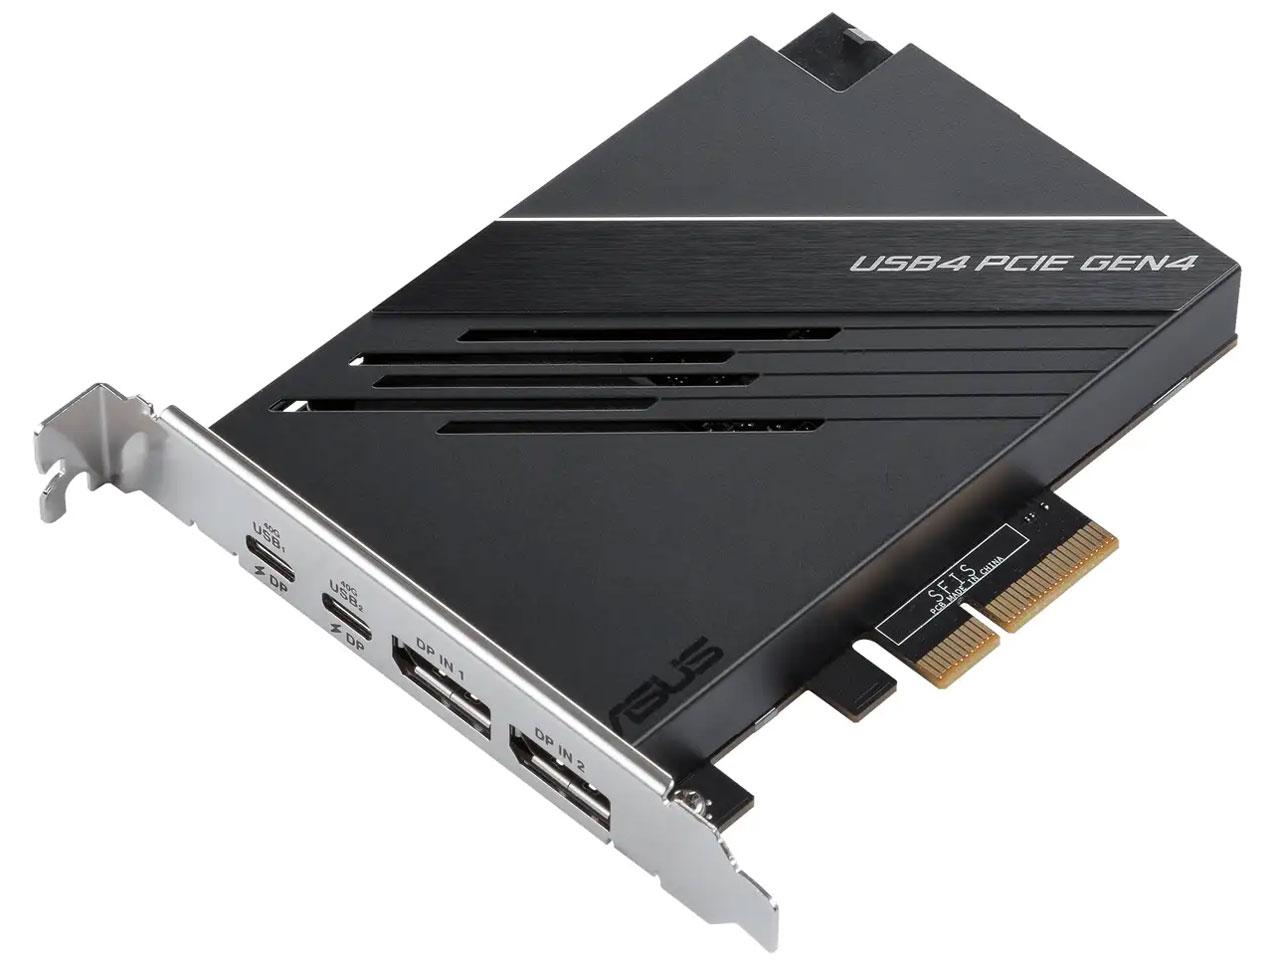 USB4 PCIE GEN4 CARD(ASU-USB4/PCIE/GEN4/CARD)